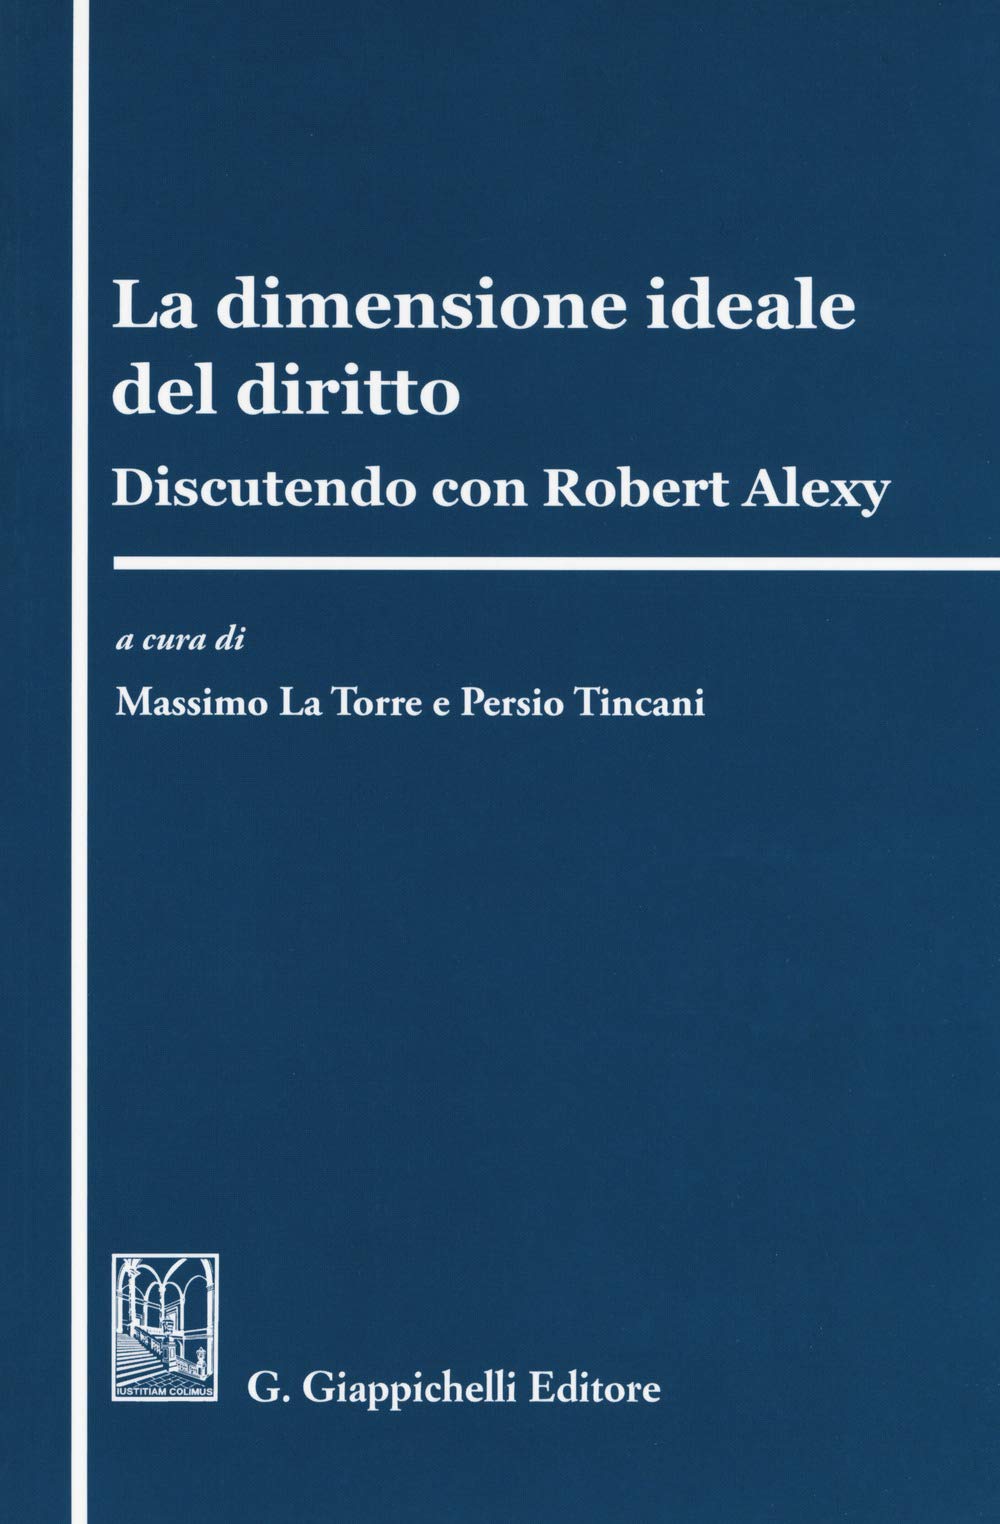 Imagen de portada del libro La dimensione ideale del diritto. Discutendo con Robert Alexy